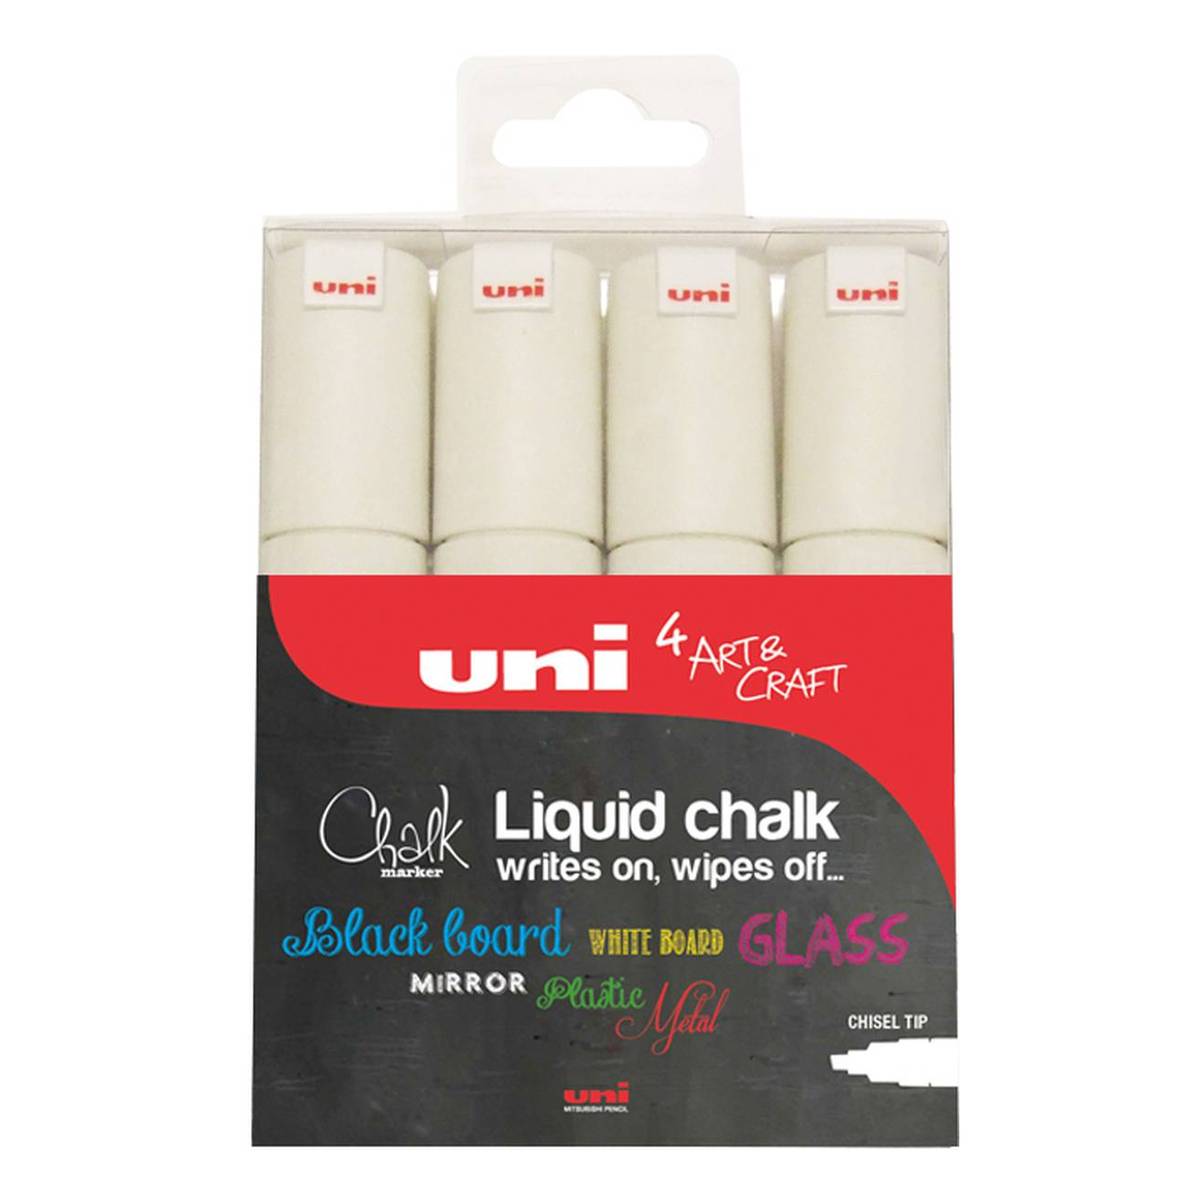 White Chalk Pencil for chalkboards - White Chalk Alternative